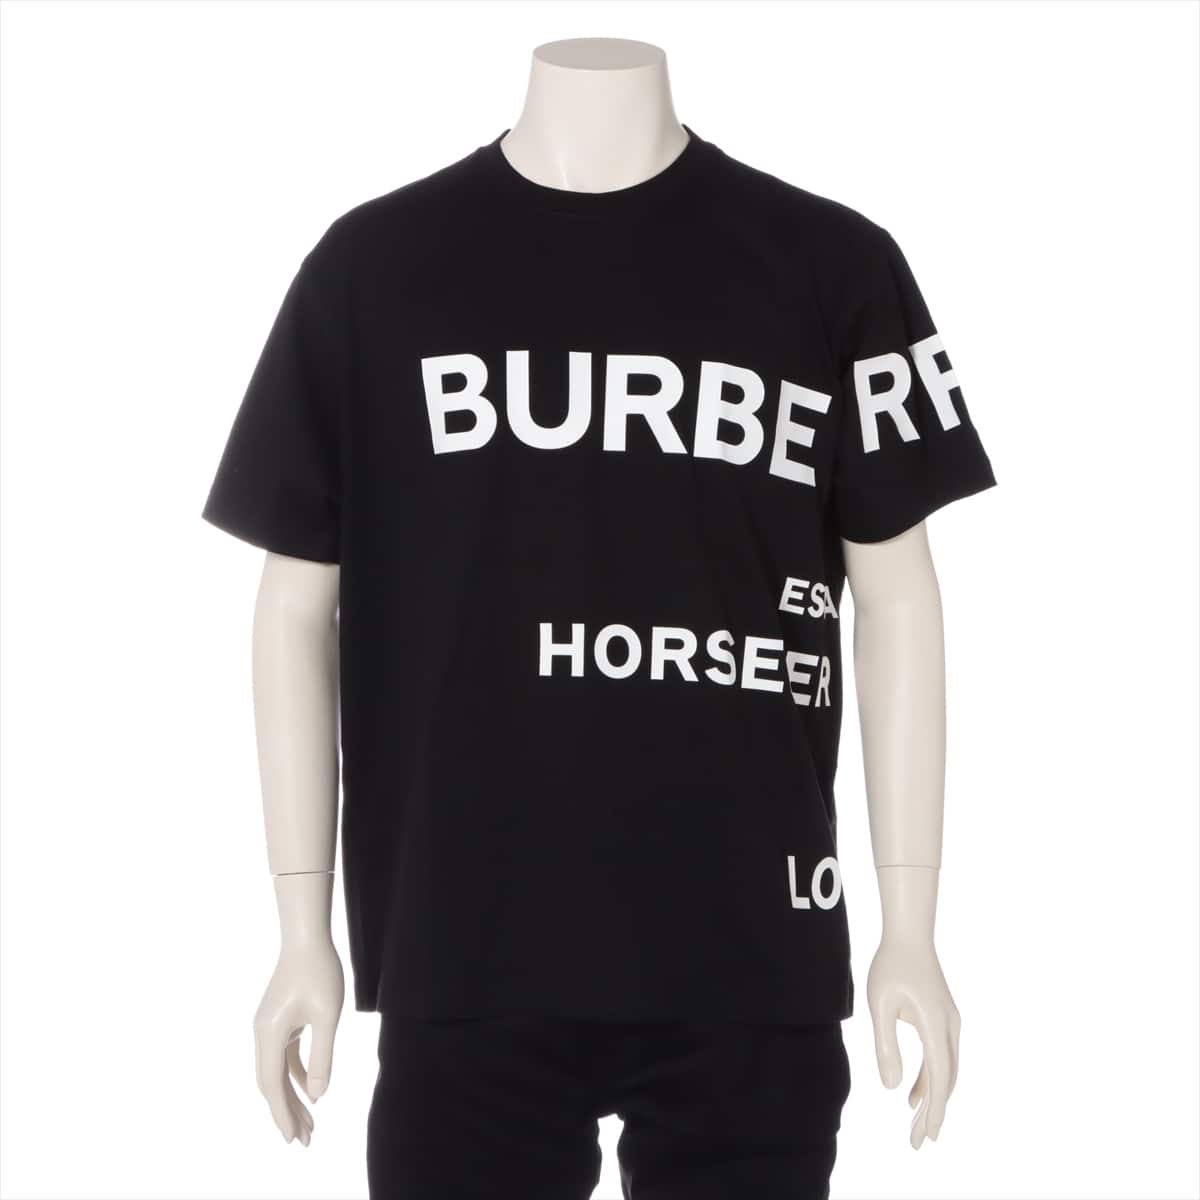 Burberry Horse ferry Tissi period Cotton T-shirt S Men's Black  8040694